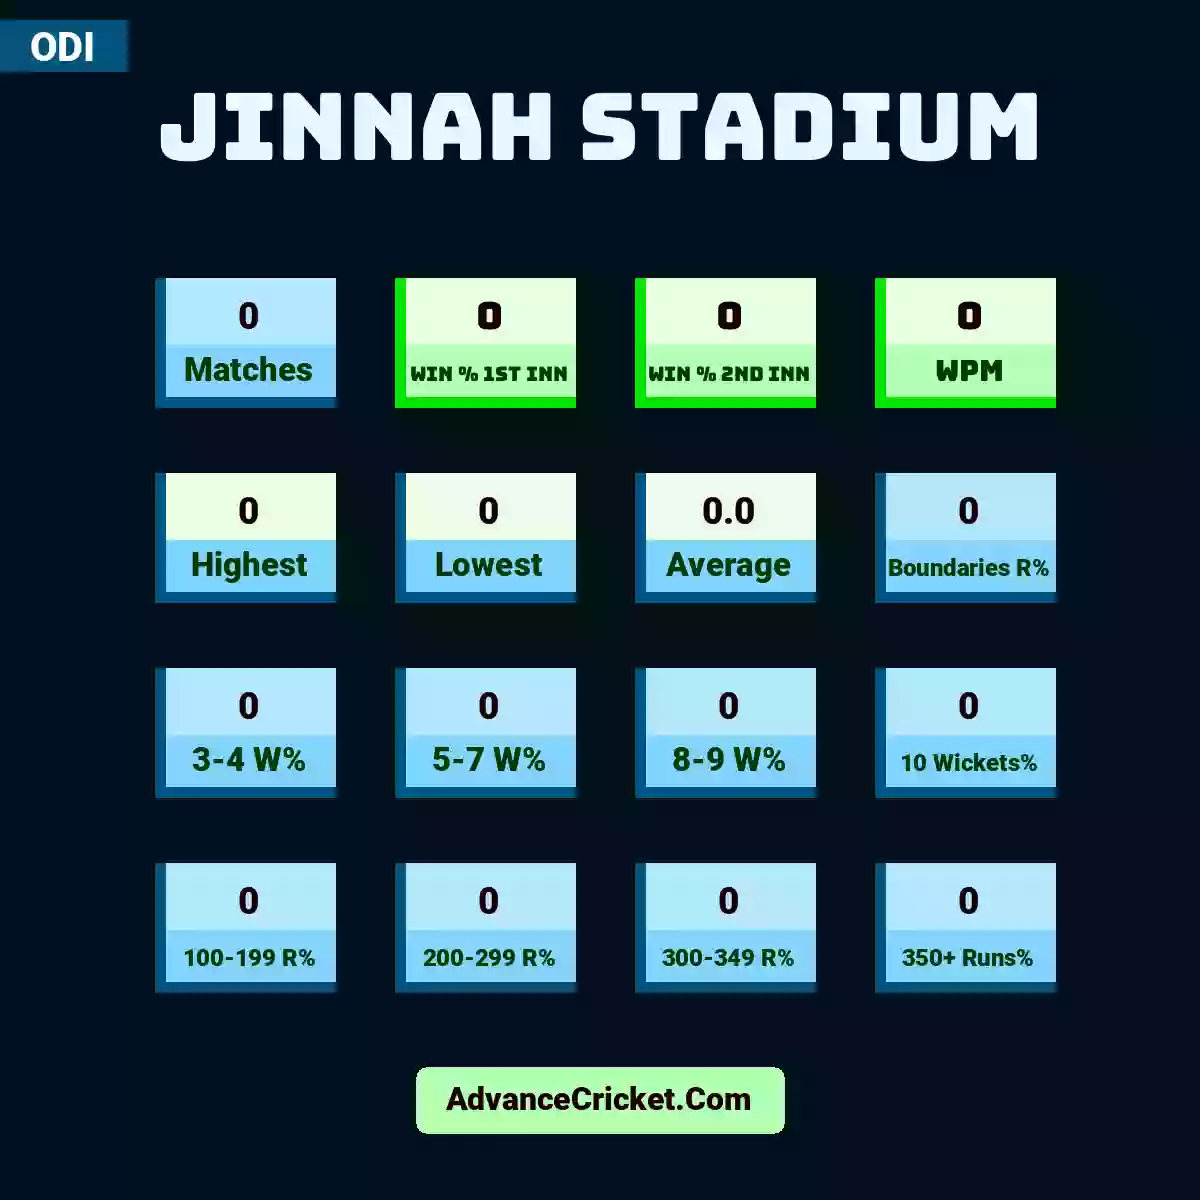 Image showing Jinnah Stadium with Matches: 0, Win % 1st Inn: 0, Win % 2nd Inn: 0, WPM: 0, Highest: 0, Lowest: 0, Average: 0.0, Boundaries R%: 0, 3-4 W%: 0, 5-7 W%: 0, 8-9 W%: 0, 10 Wickets%: 0, 100-199 R%: 0, 200-299 R%: 0, 300-349 R%: 0, 350+ Runs%: 0.